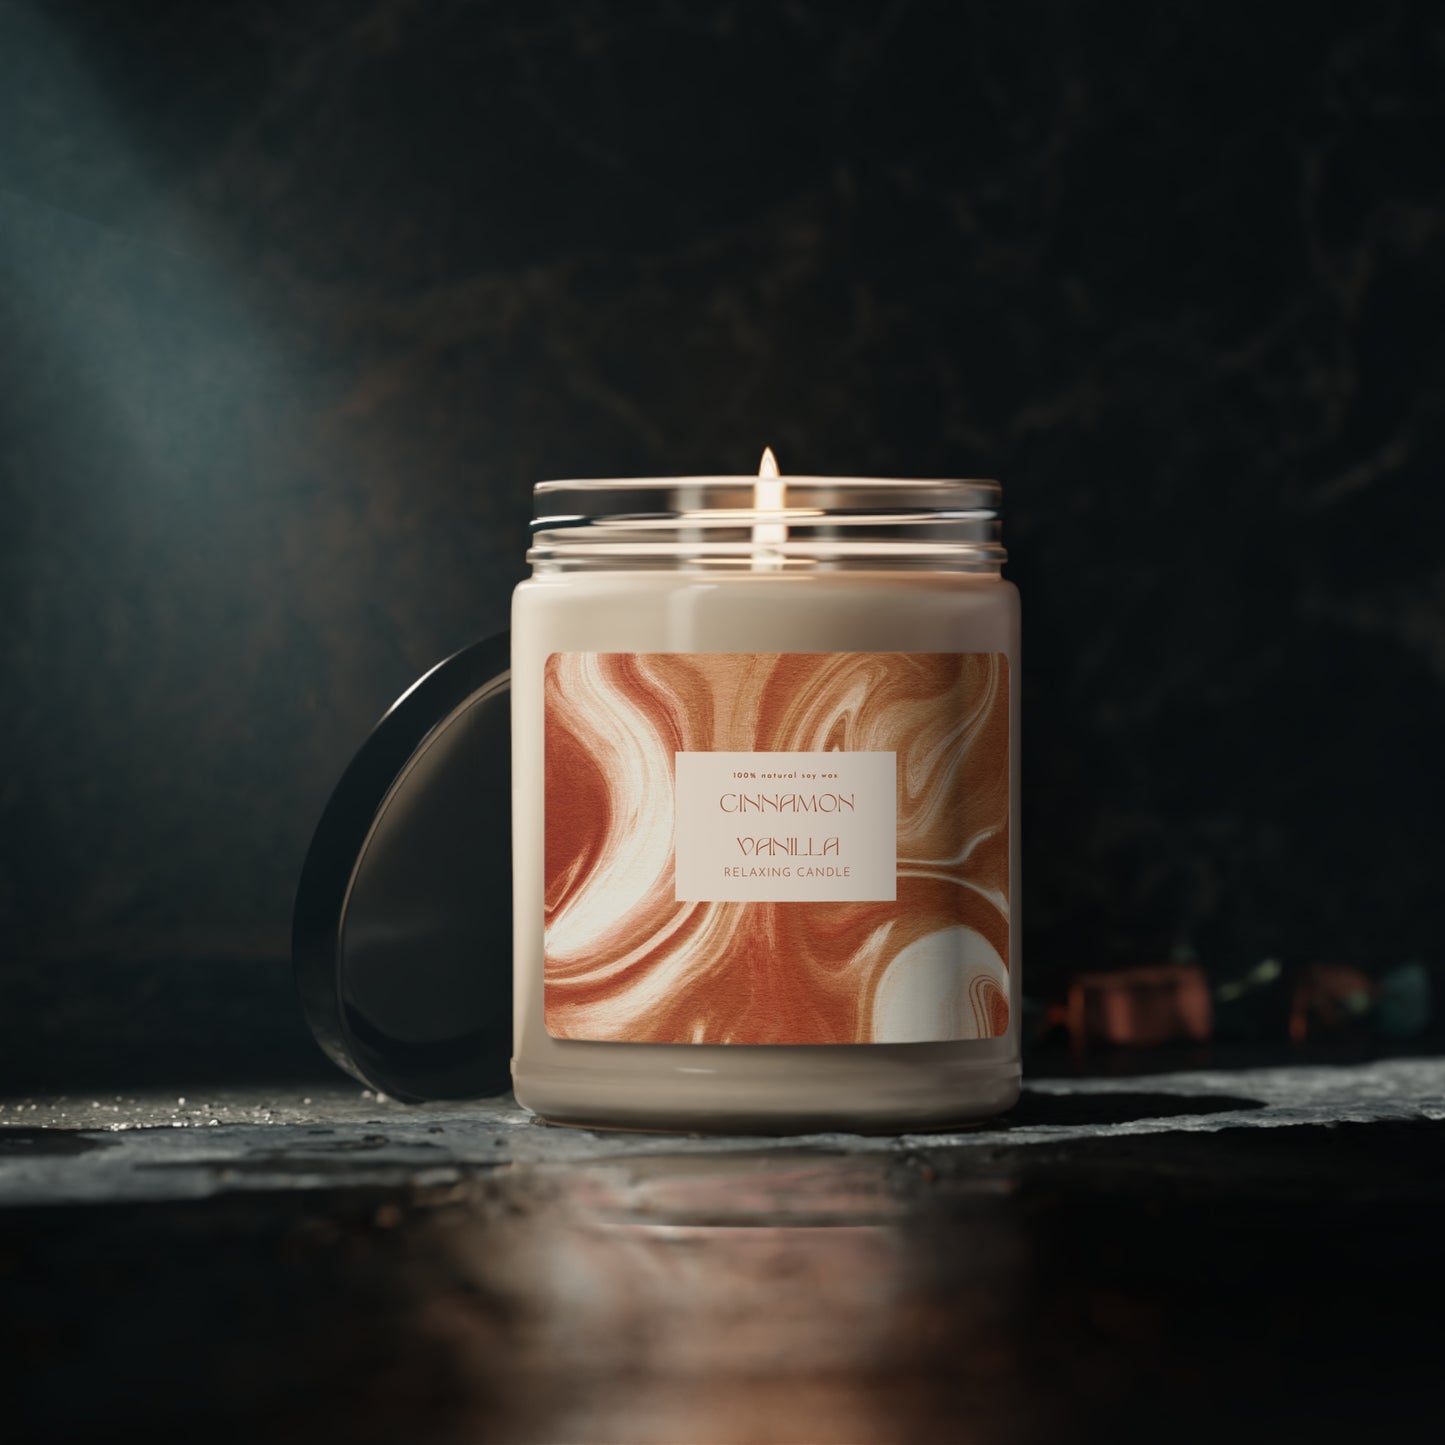 Cinnamon & Vanilla Scented Soy Candle, 9oz